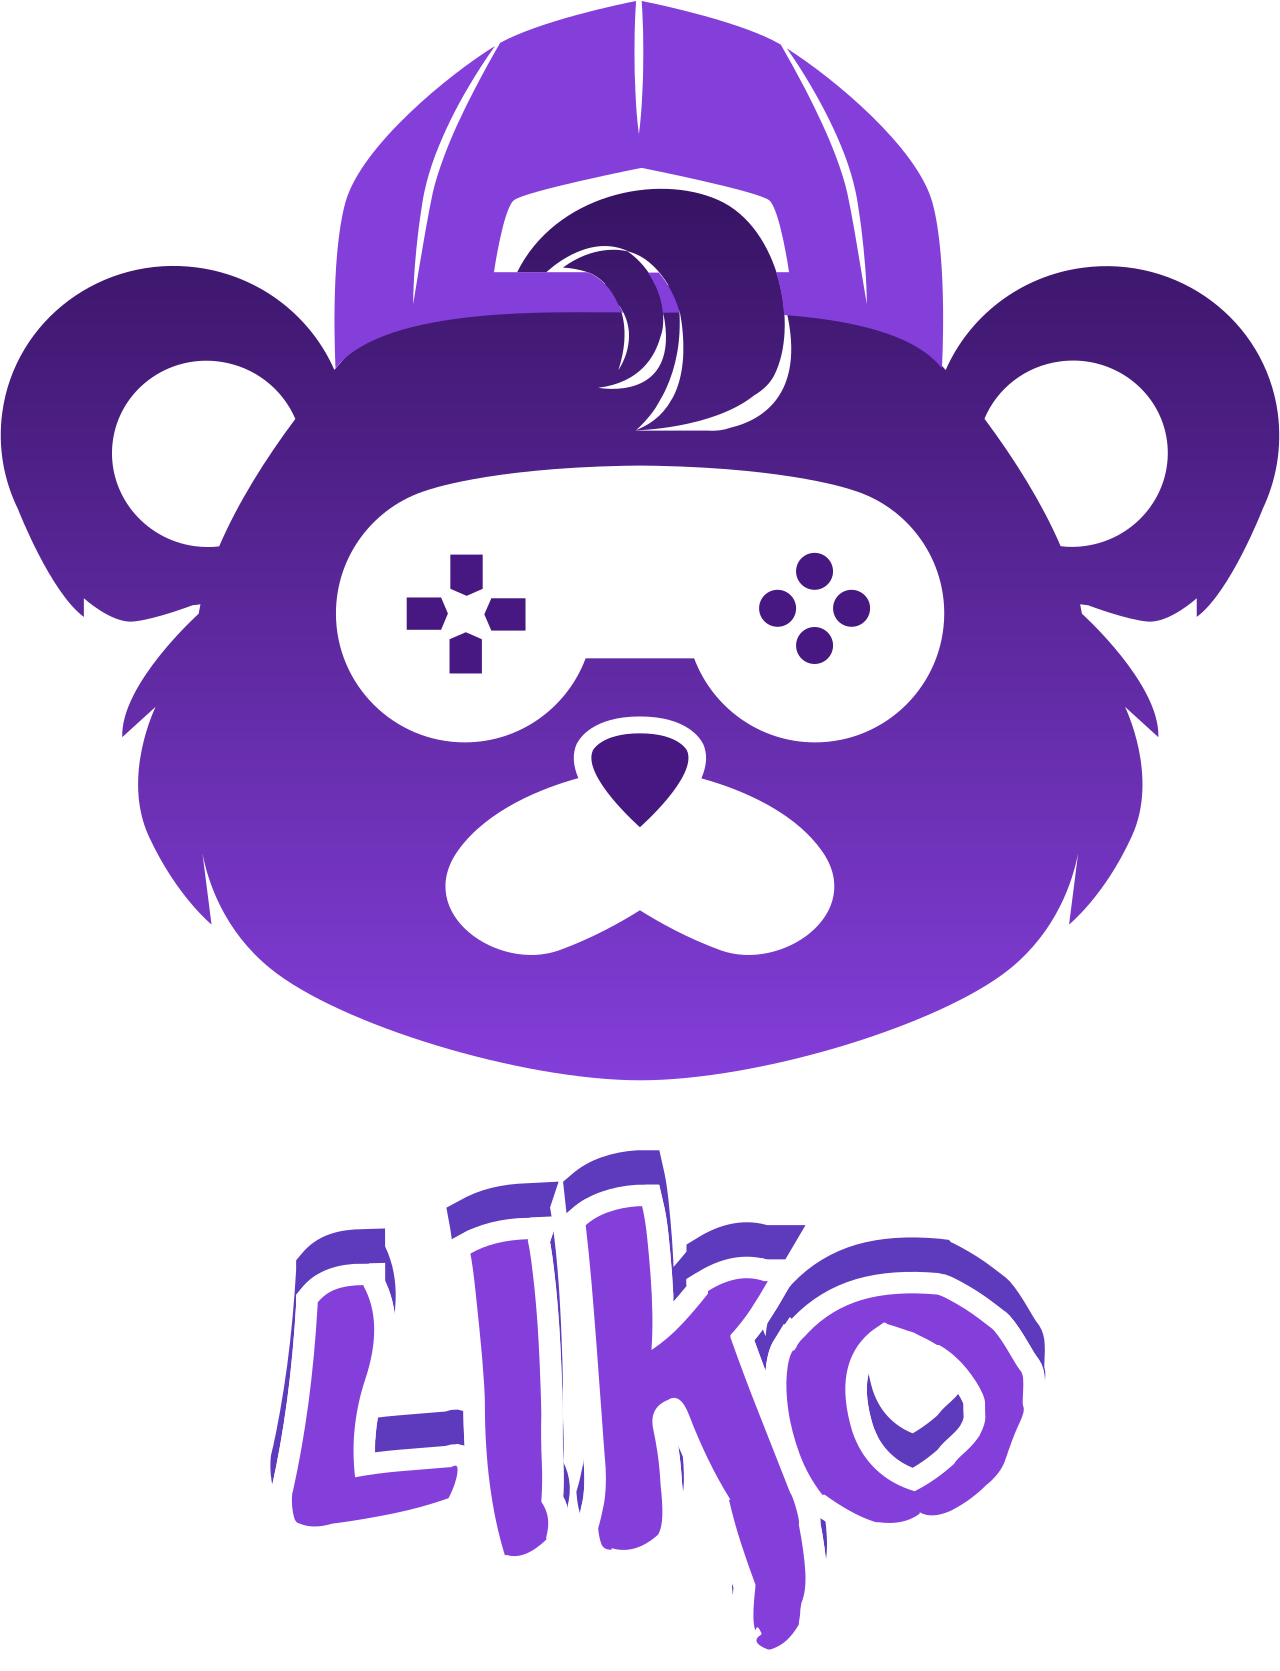 Liko's logo